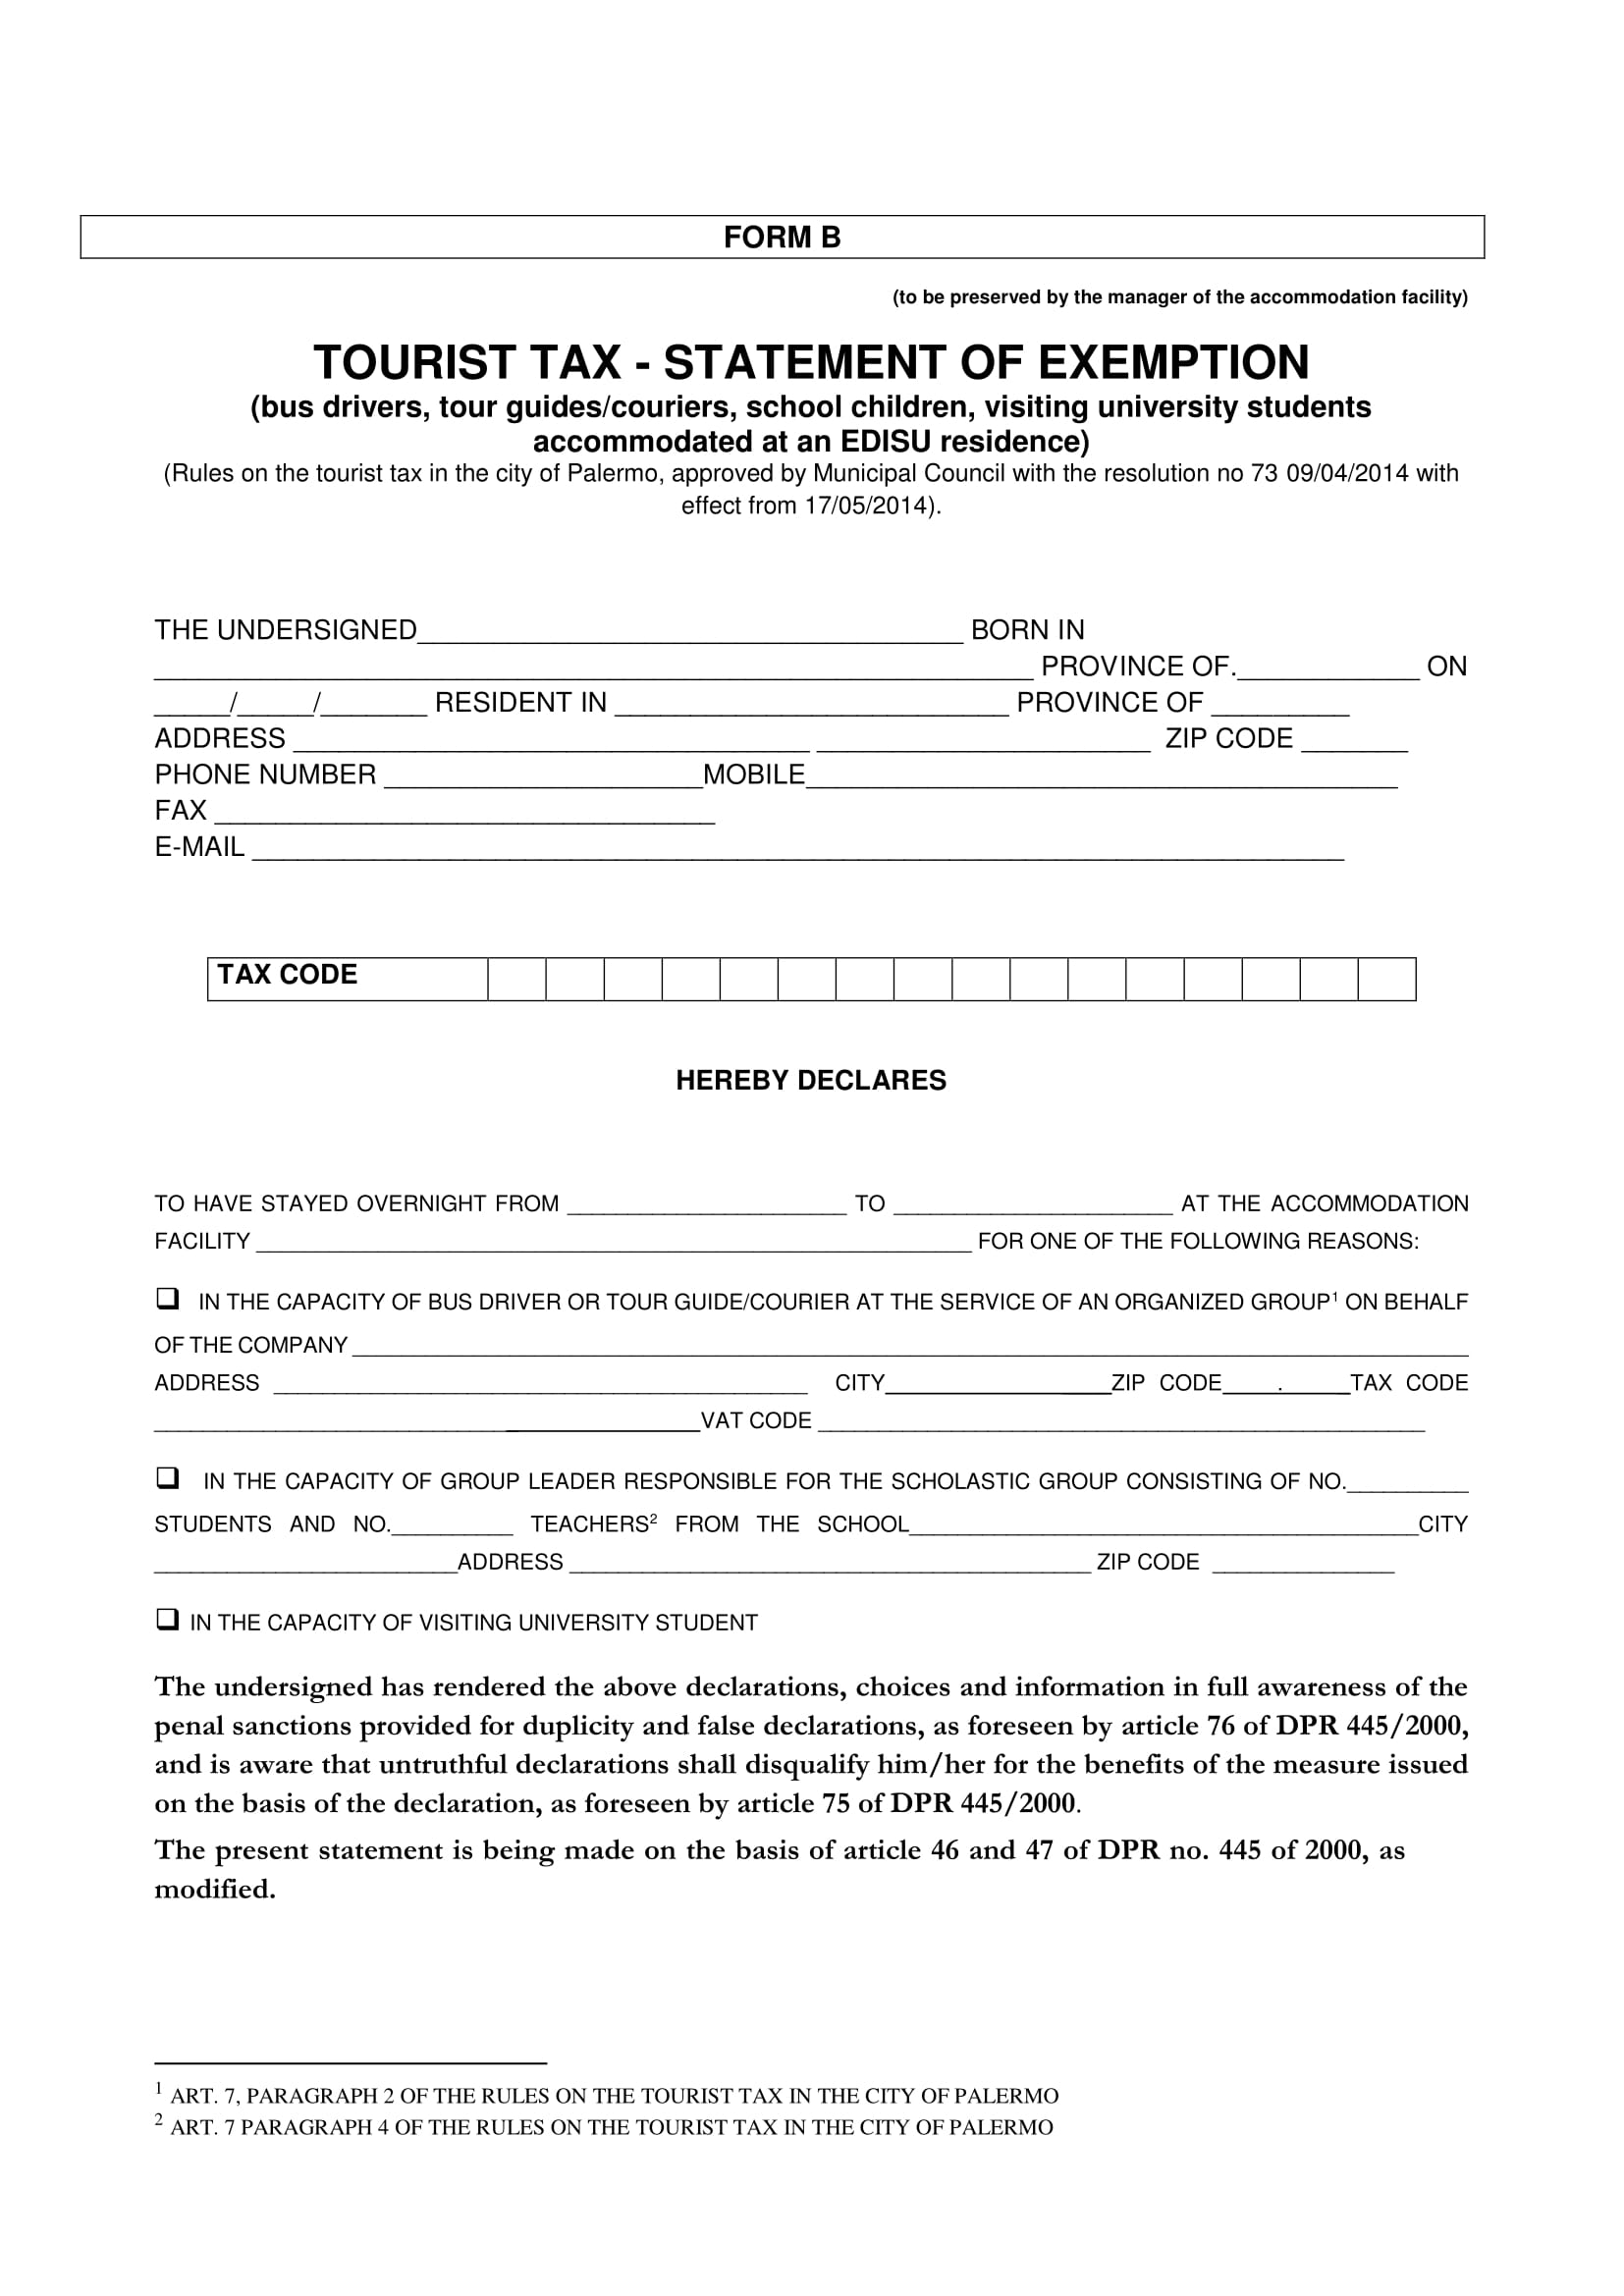 tourist tax statement of exemption 1